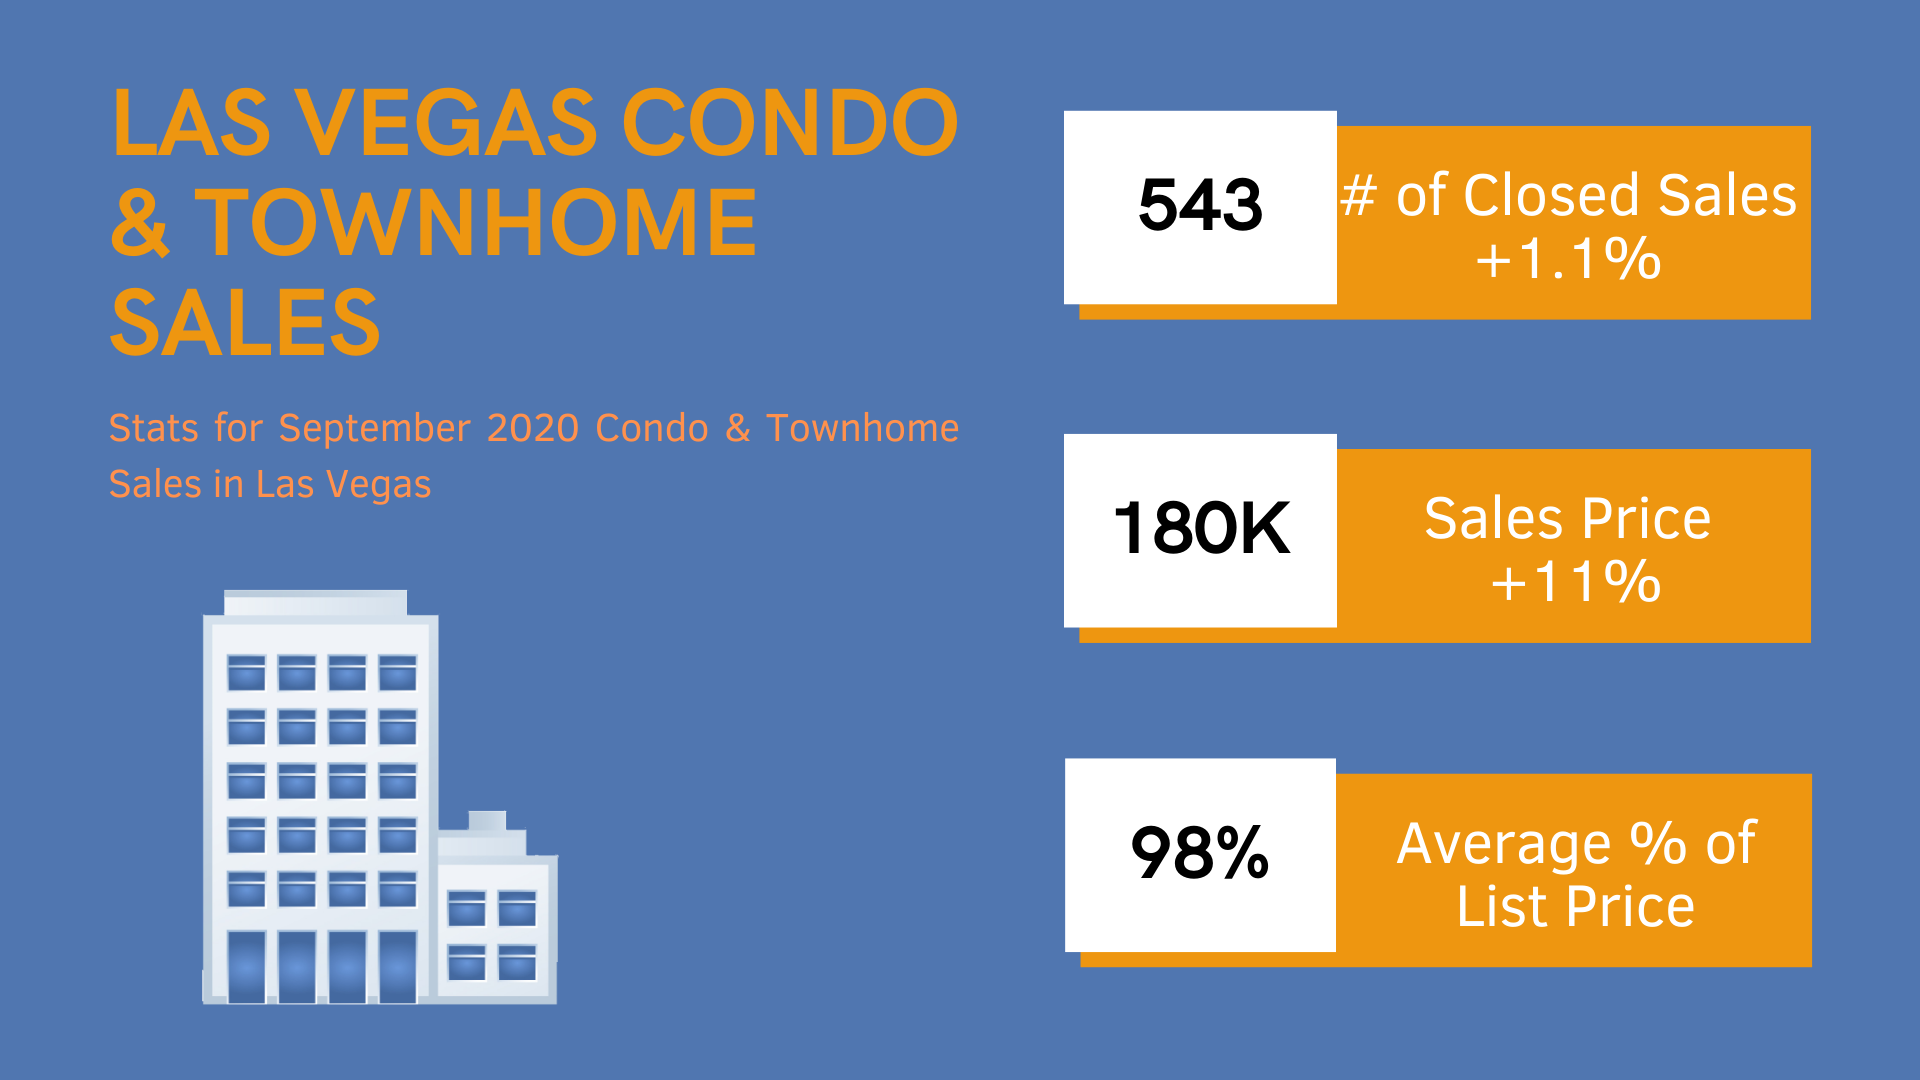 Las Vegas condo sales for September 2020